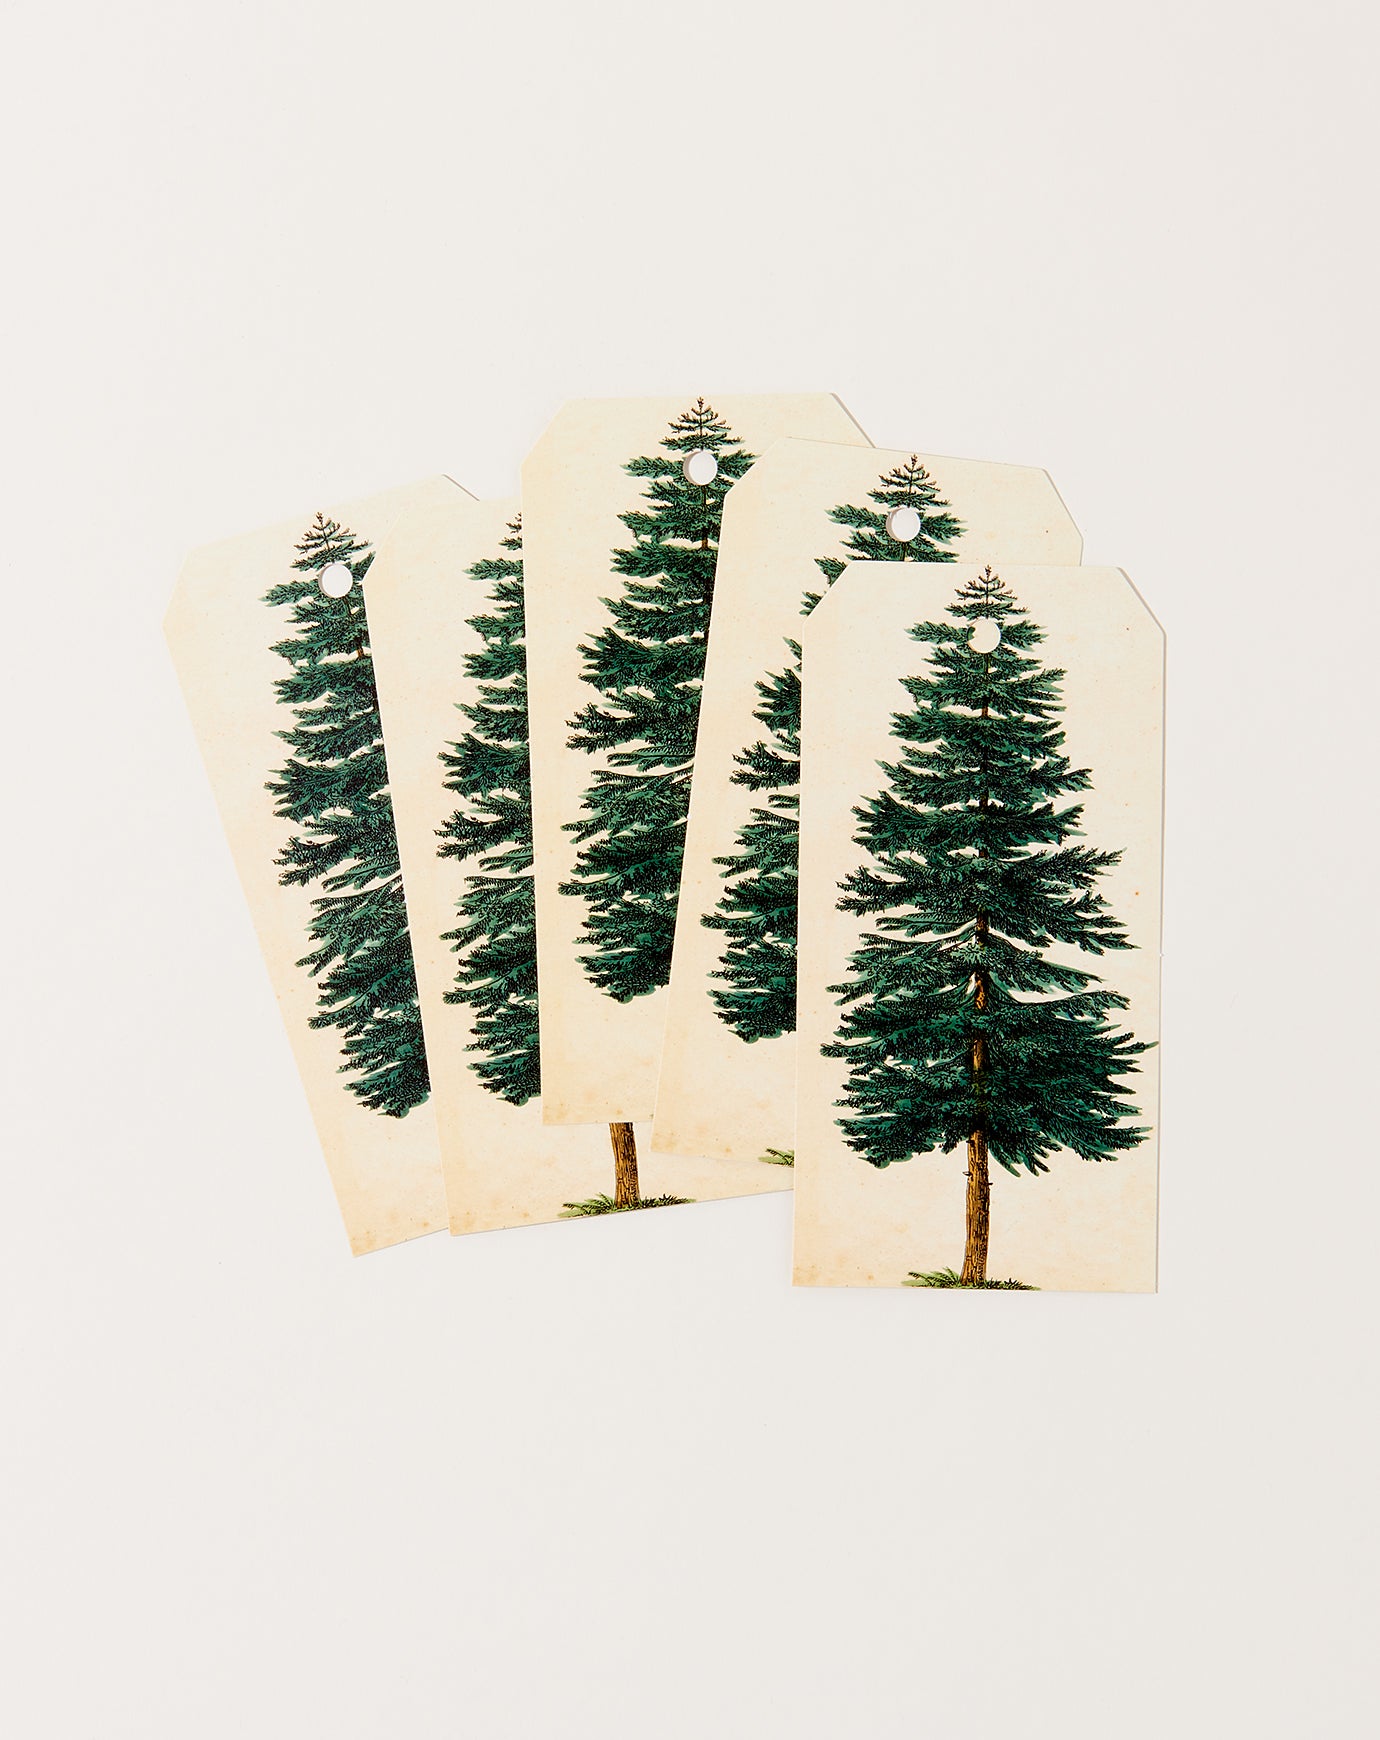 John Derian Evergreen Tree Gift Tags